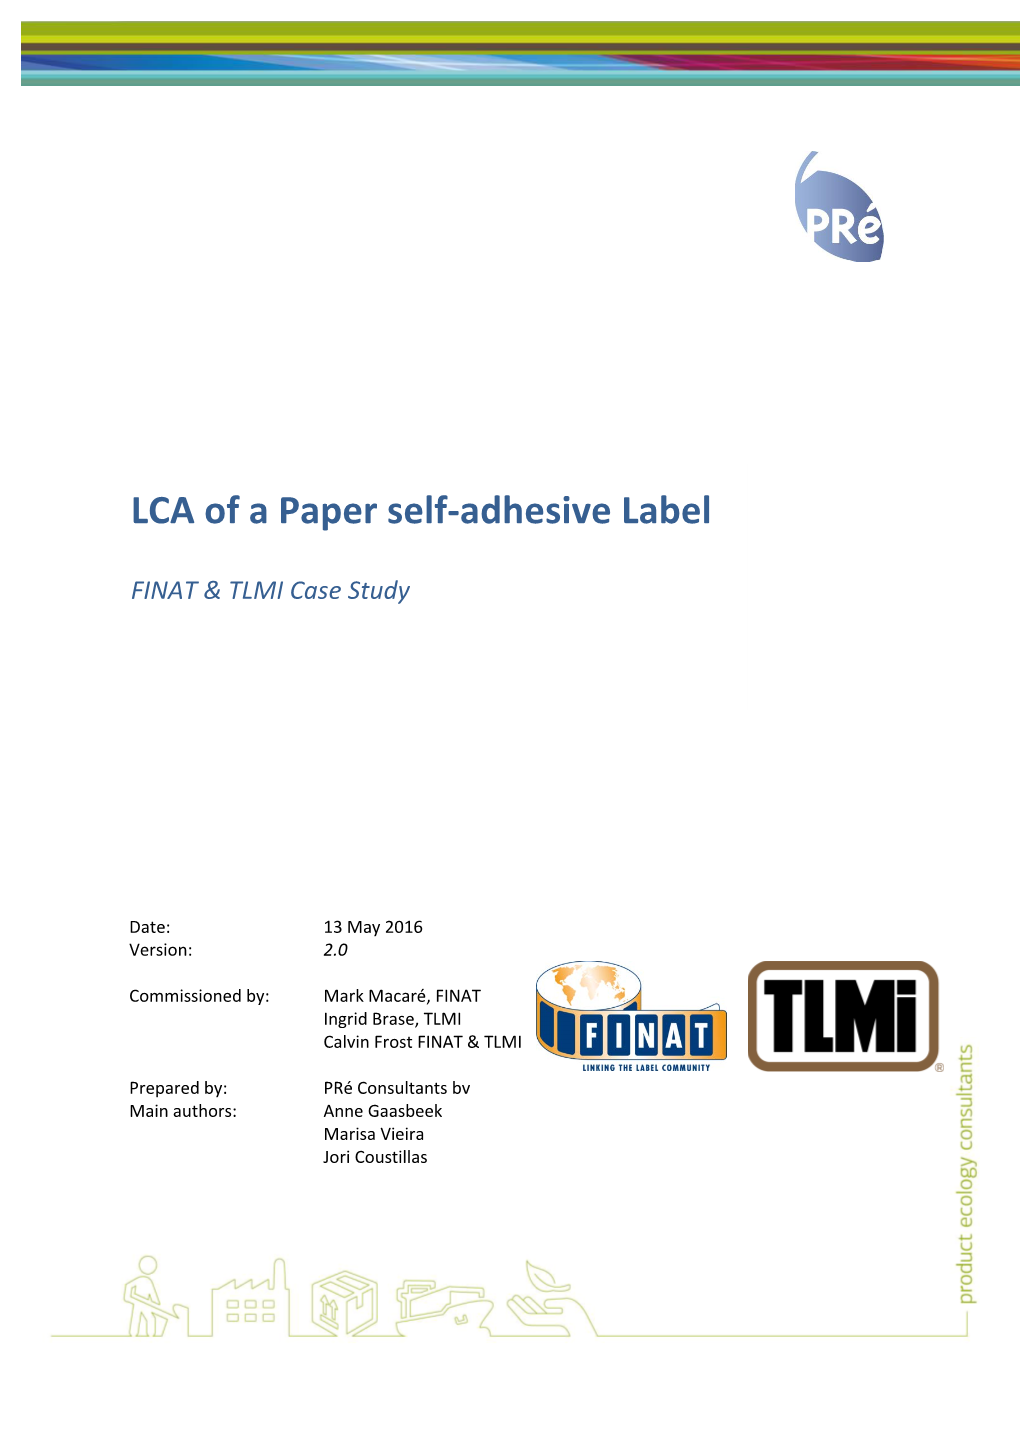 LCA Paper Self-Adhesive Label Case Study